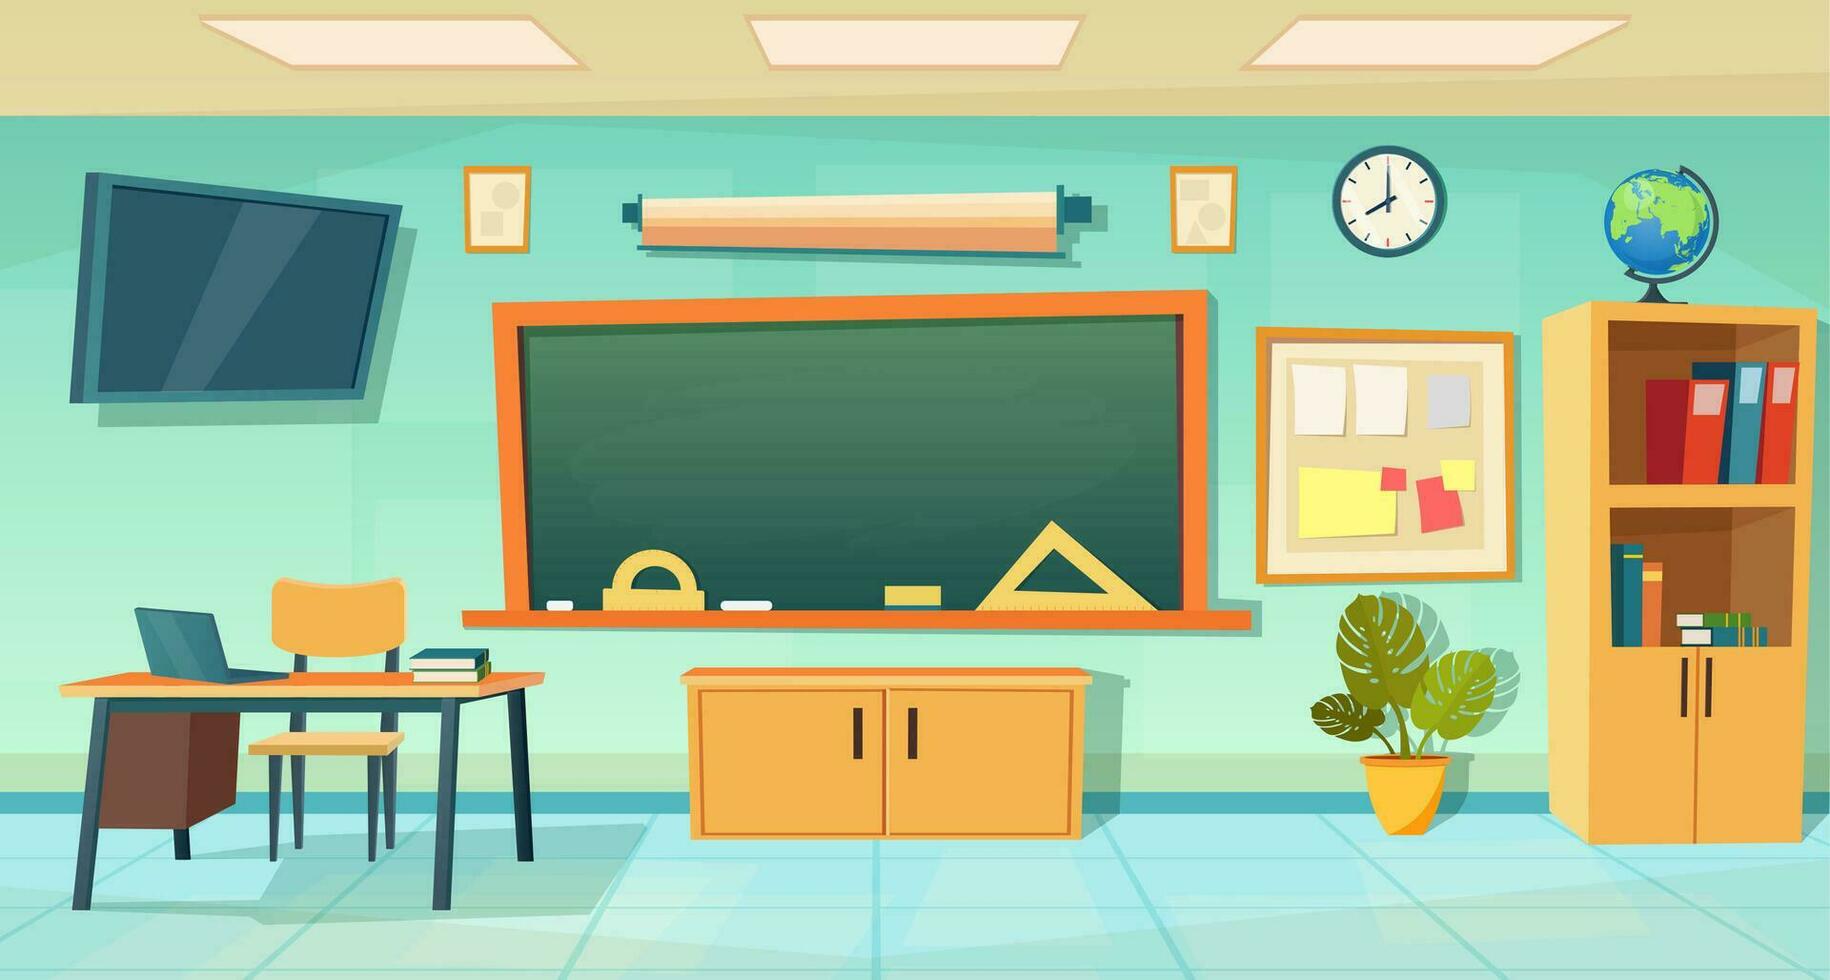 Nobody school classroom interior with teachers desk and blackboard. cartoon School Education background. Classroom interior. Meeting room. Vector illustration in a flat style